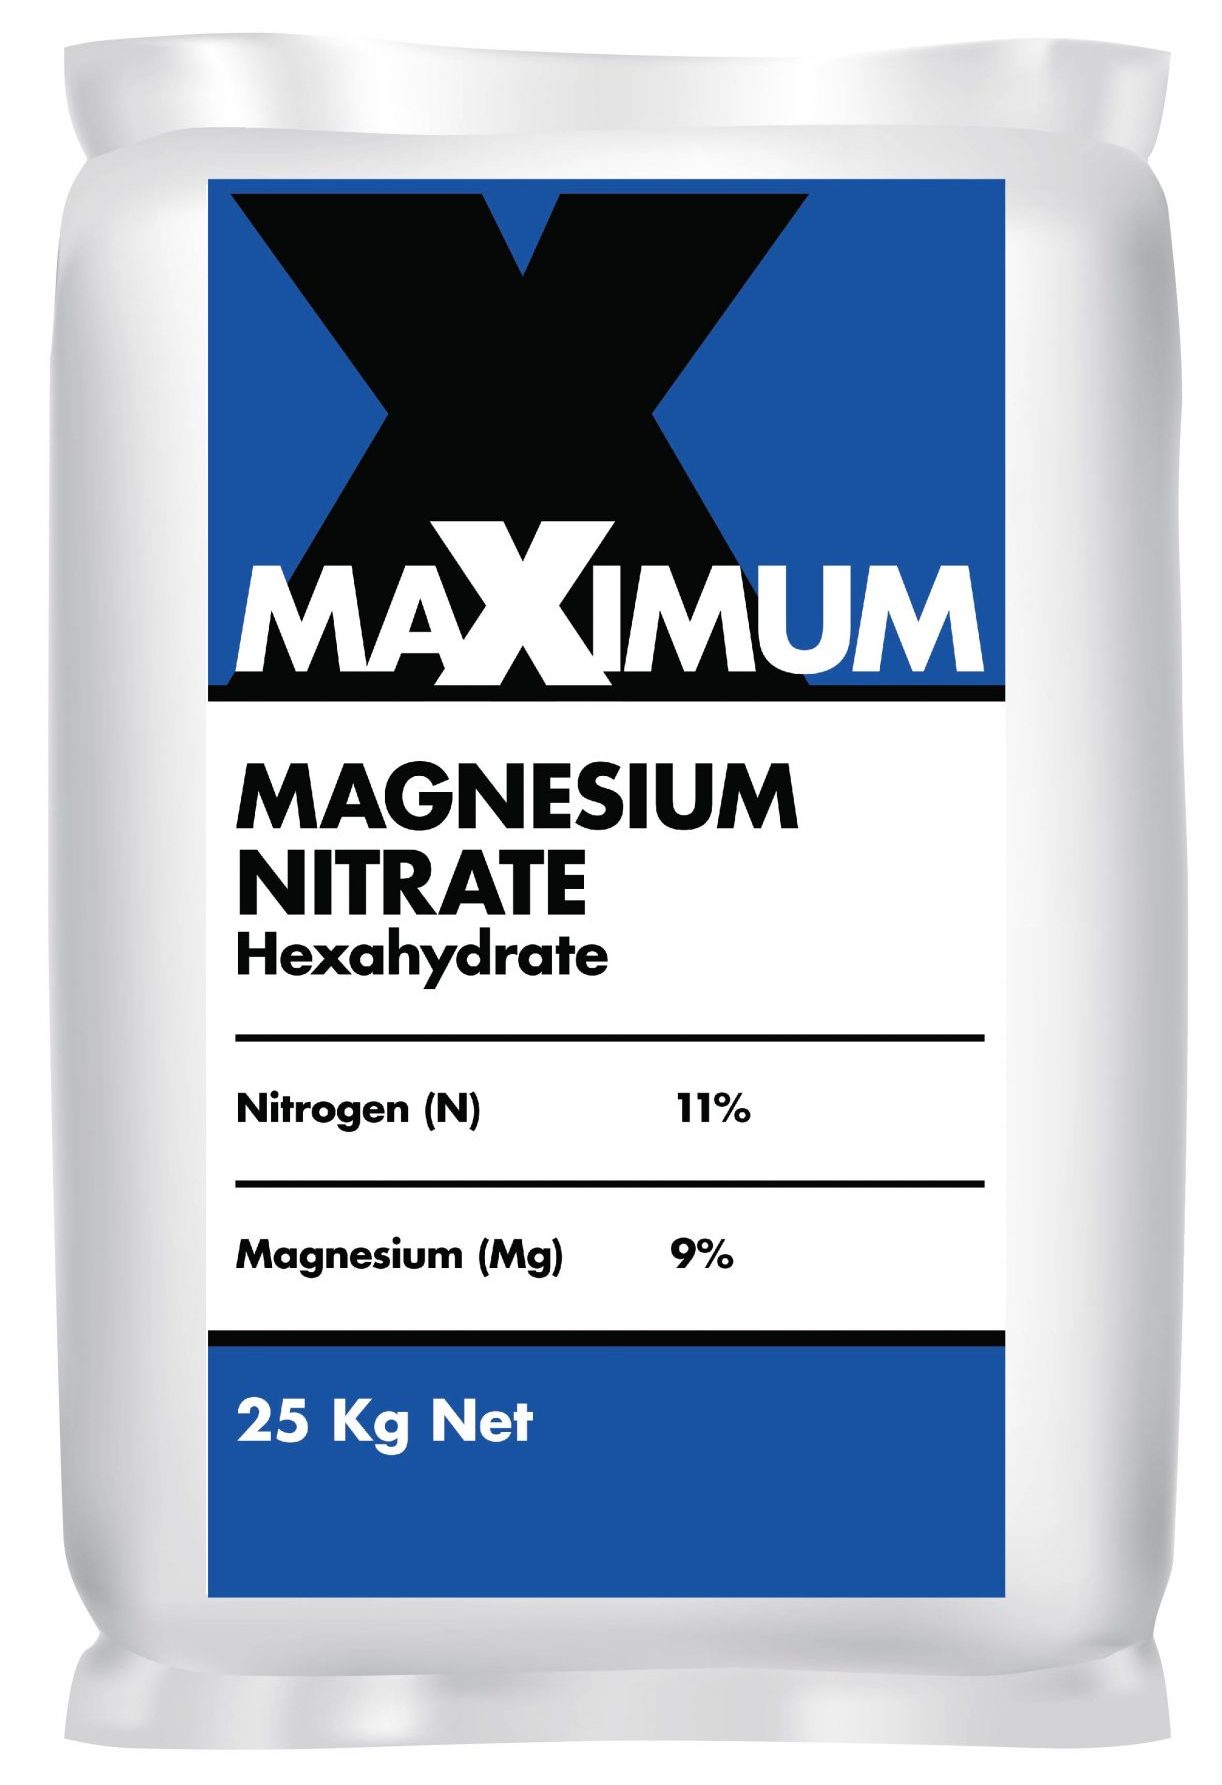 Maximum Potassium nitrate (Tech) - Campbells Fertilisers Australia